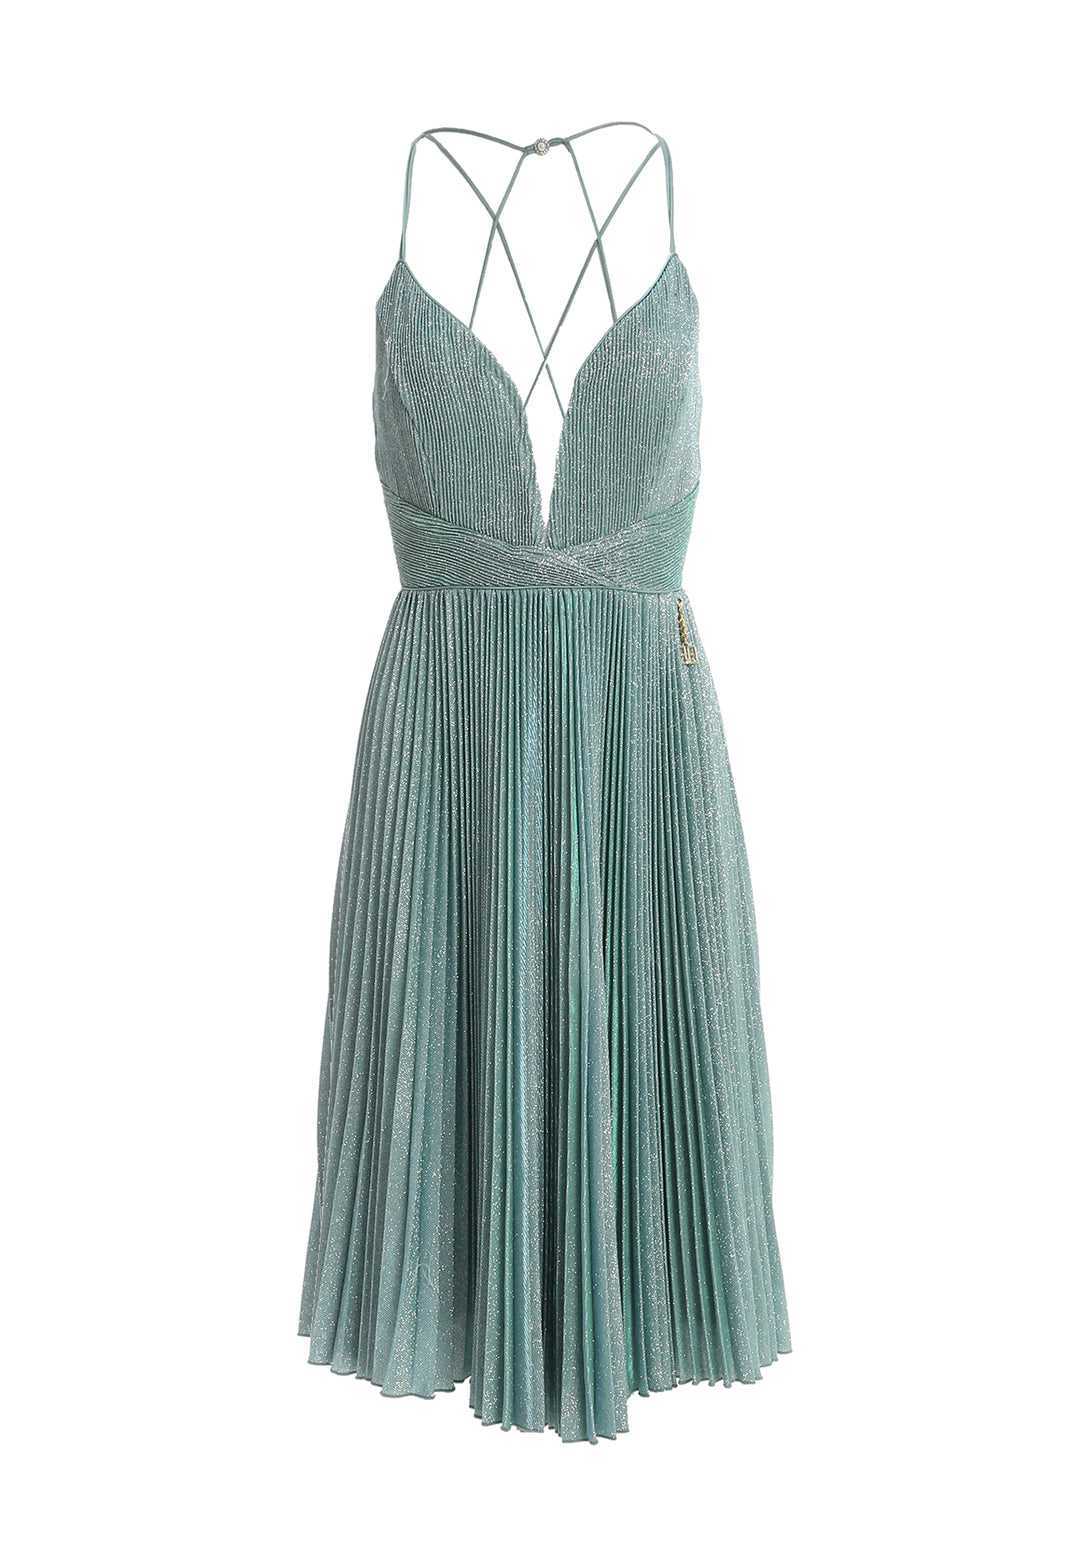 Sleeveless dress middle length with plissè effect metallic fabric